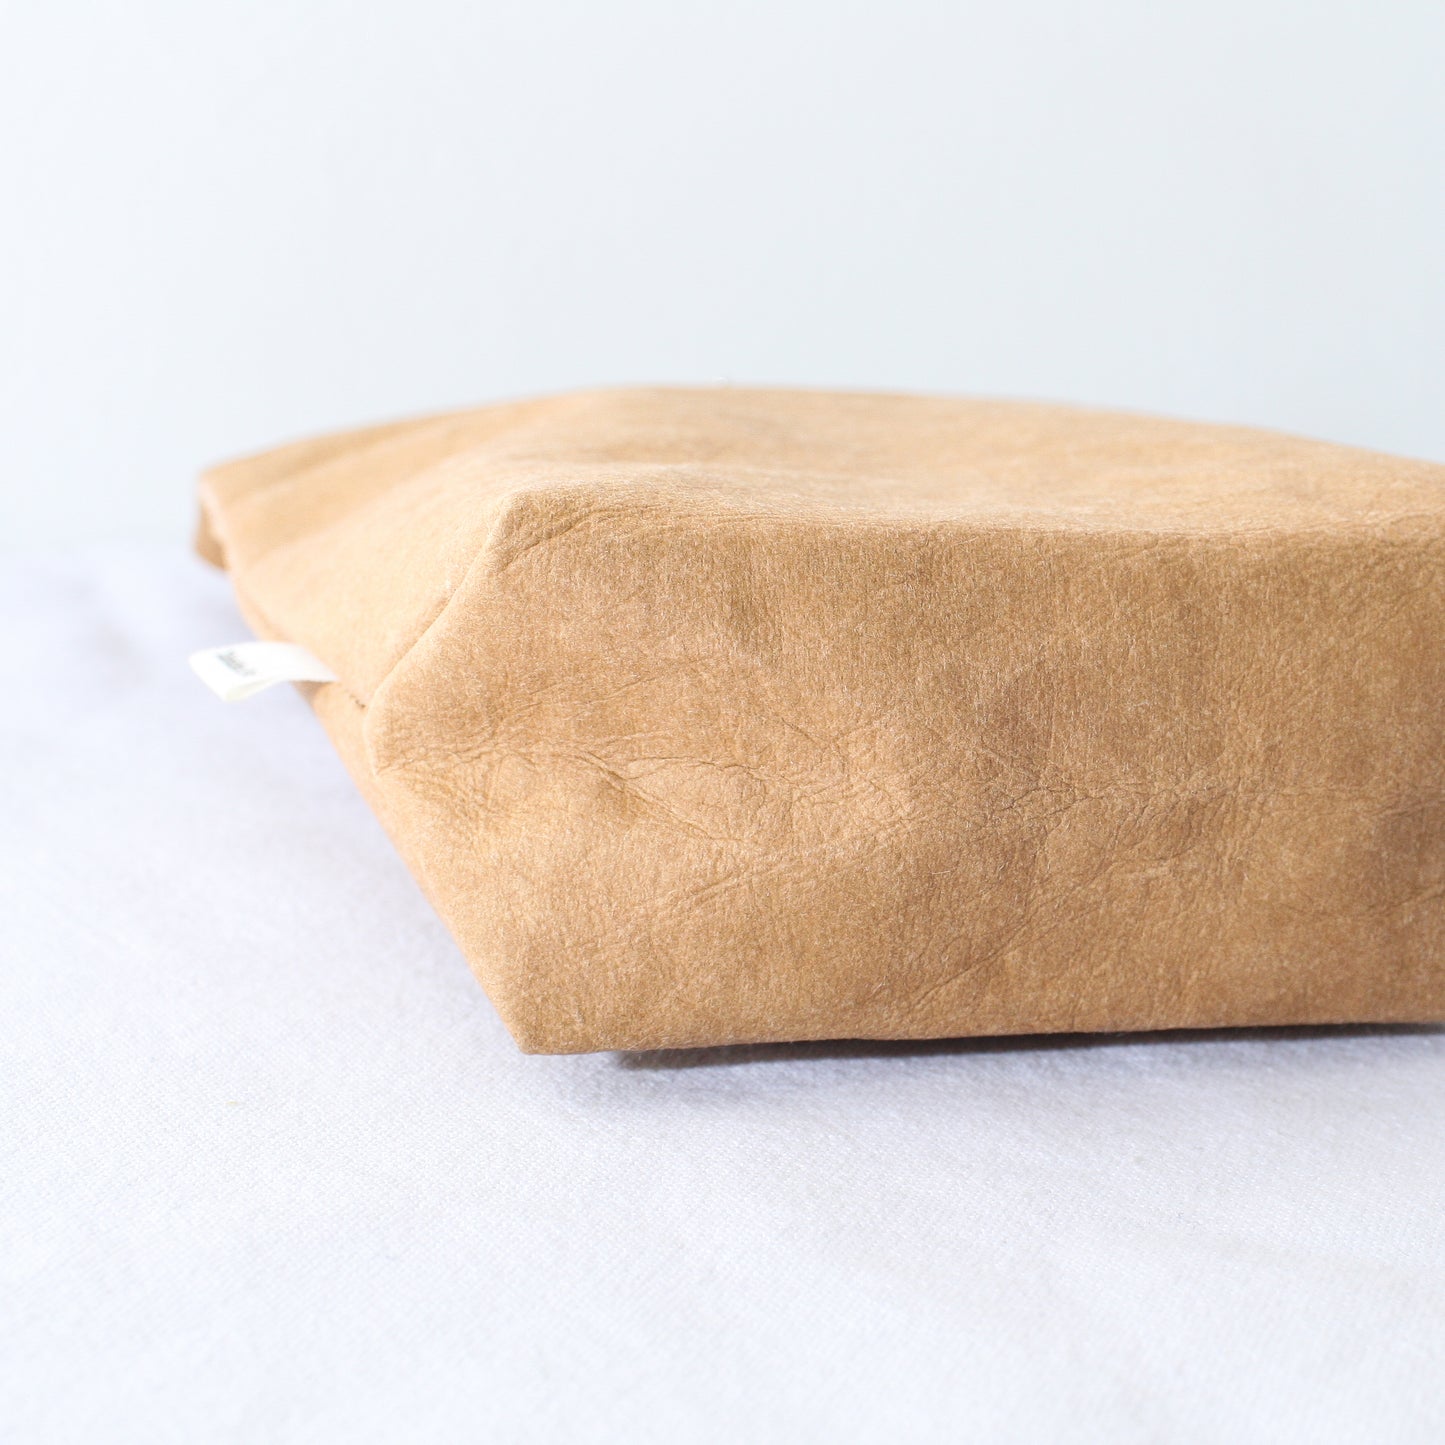 Washable Vegan Leather Snack Bag